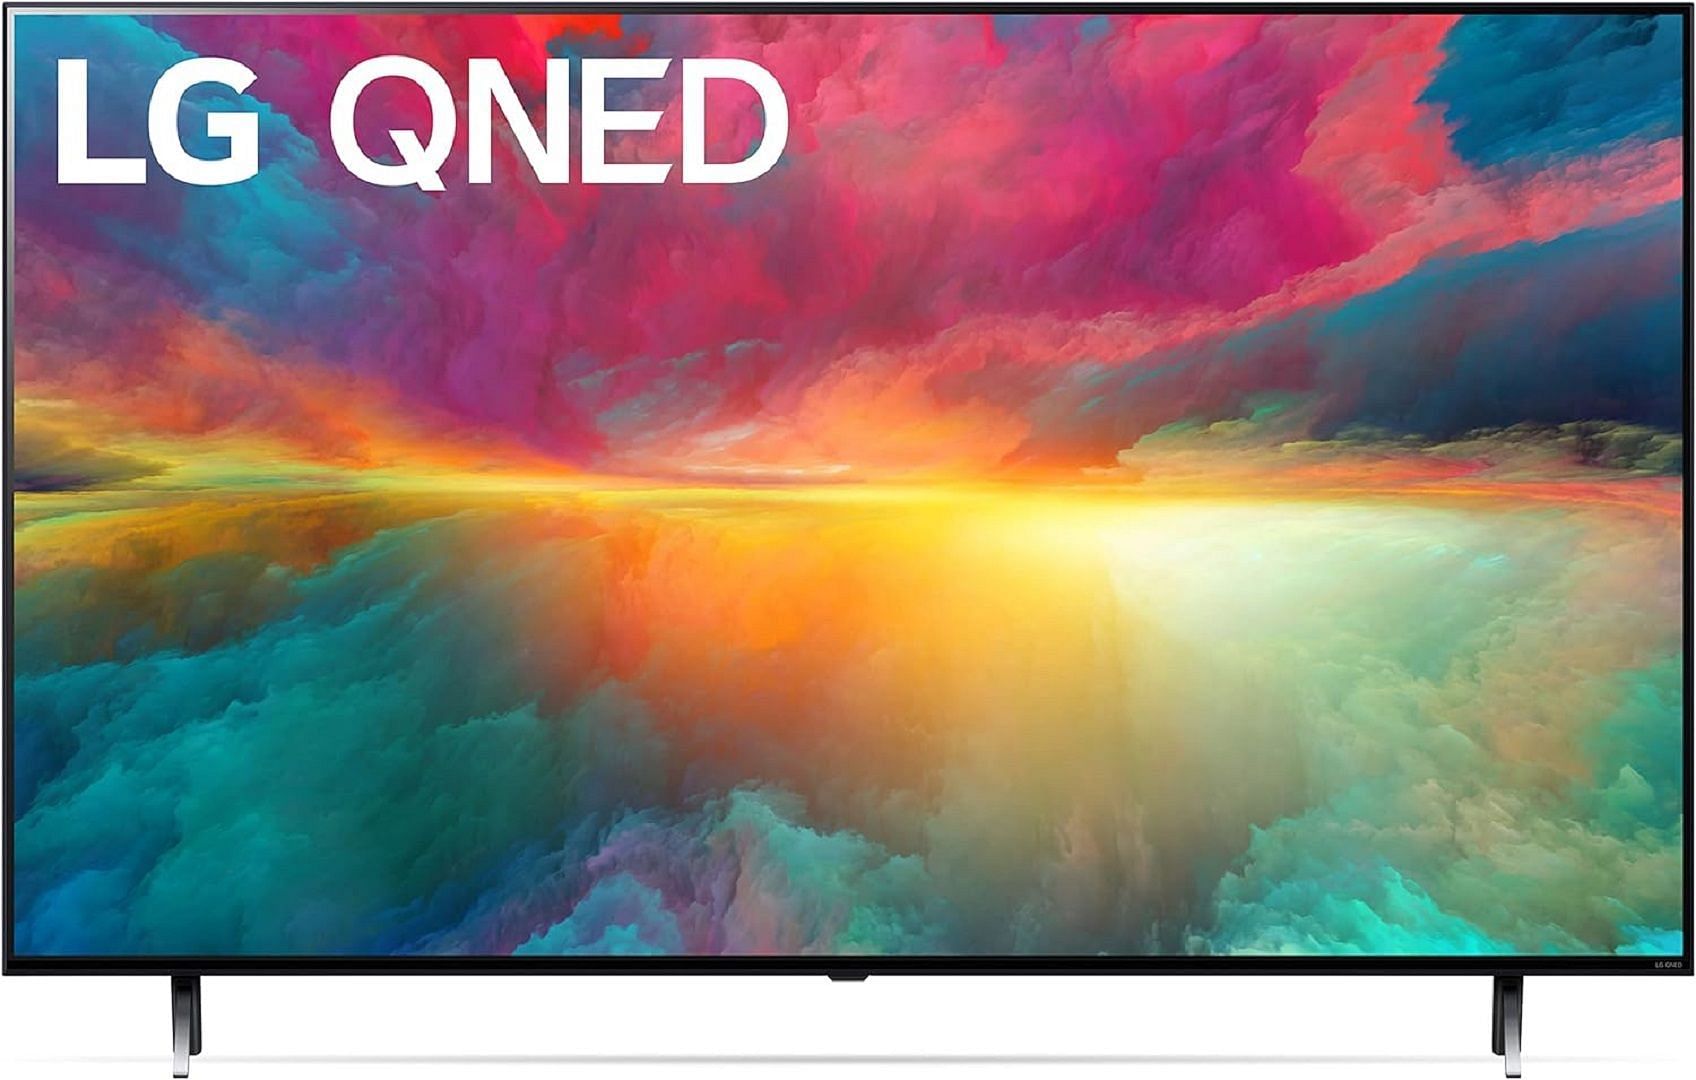 LG QNED75 75-inch QNED TV (Image via LG)